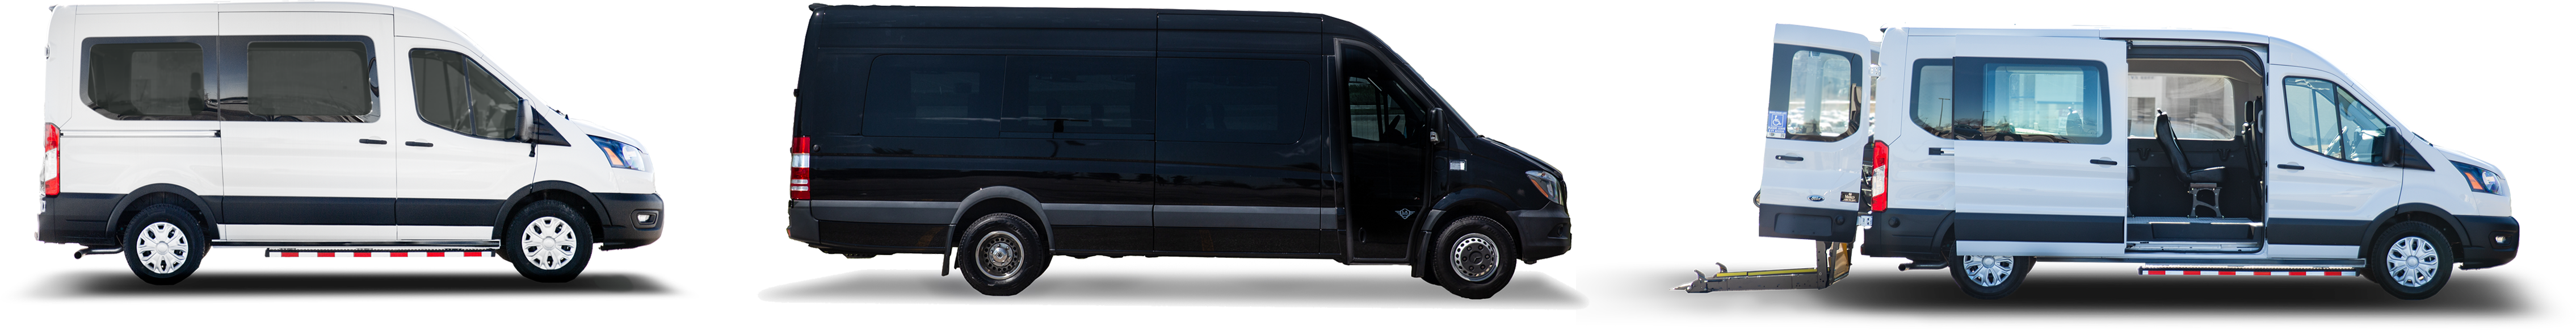 available van rentals at masters transportation